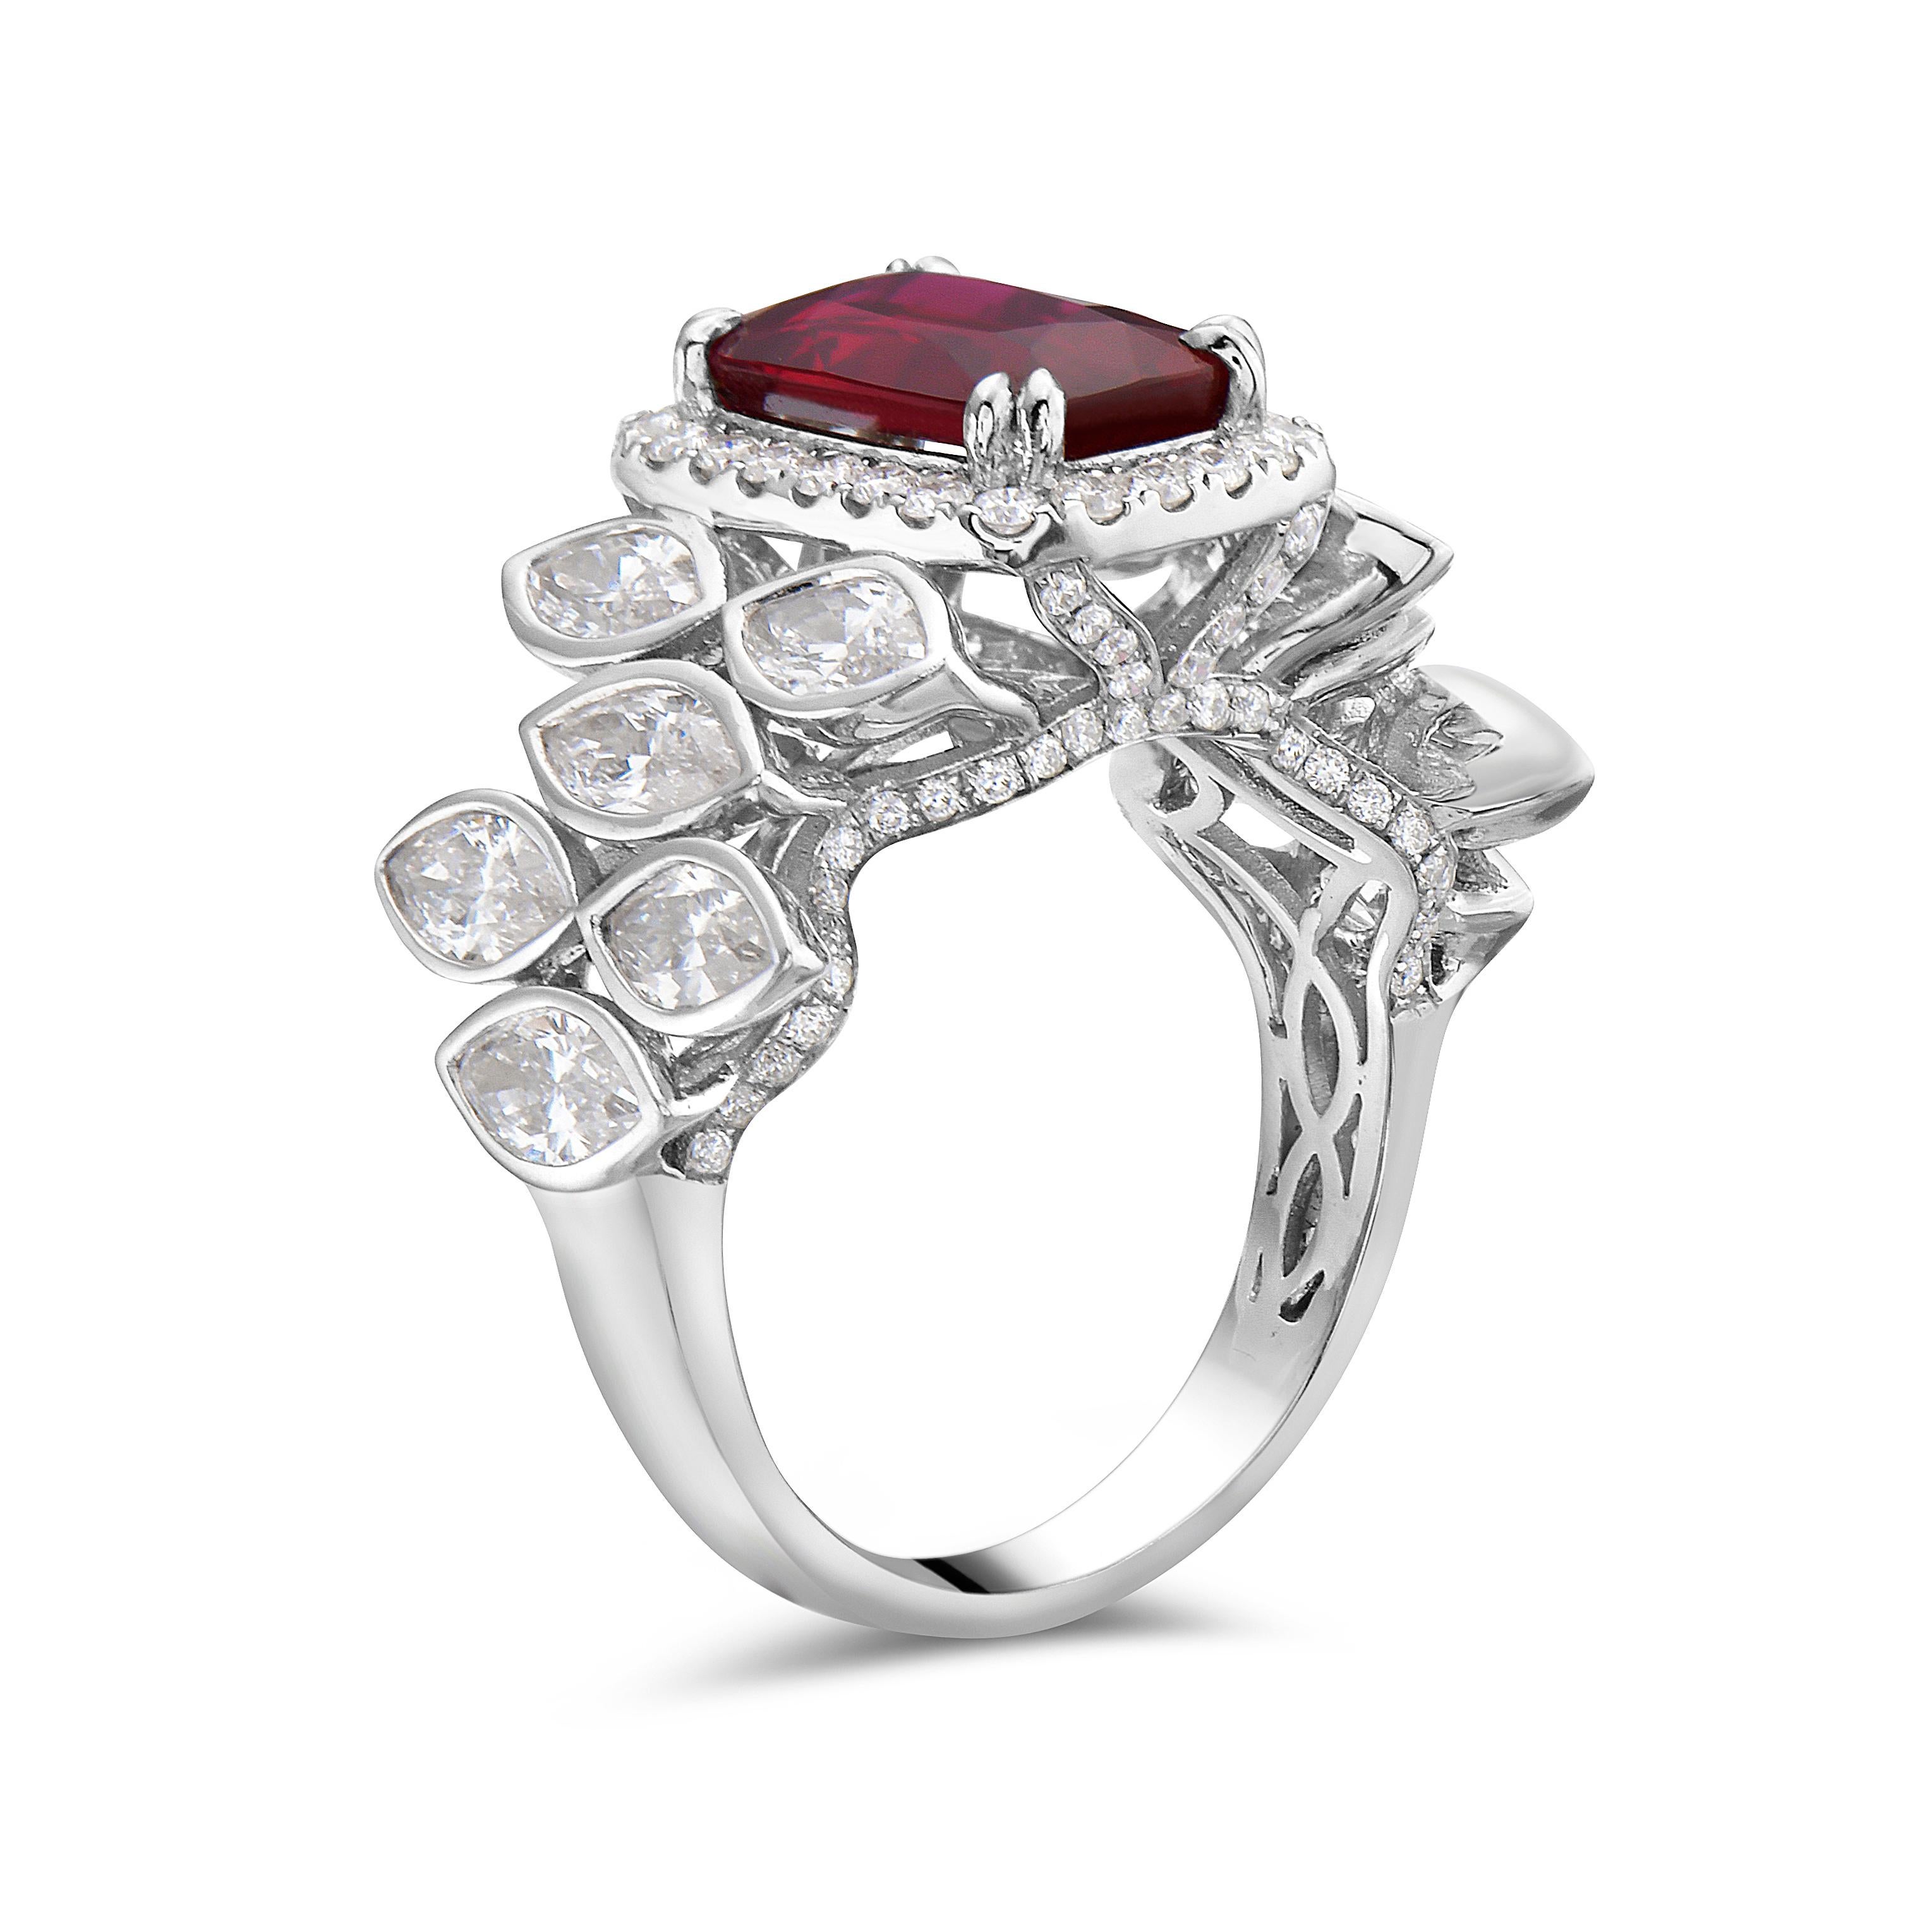 This mesmerising 3.04 ctw cushion cut ruby ring is accented with 2.86 ctw white diamonds set in 18K white gold
ID - RI613421
Metal: 18K White Gold
Stone: Ruby
Stone Cut: Cushion
Stone Carat Total Weight: 3.04 ctw
Diamond:  White Diamond
Diamond